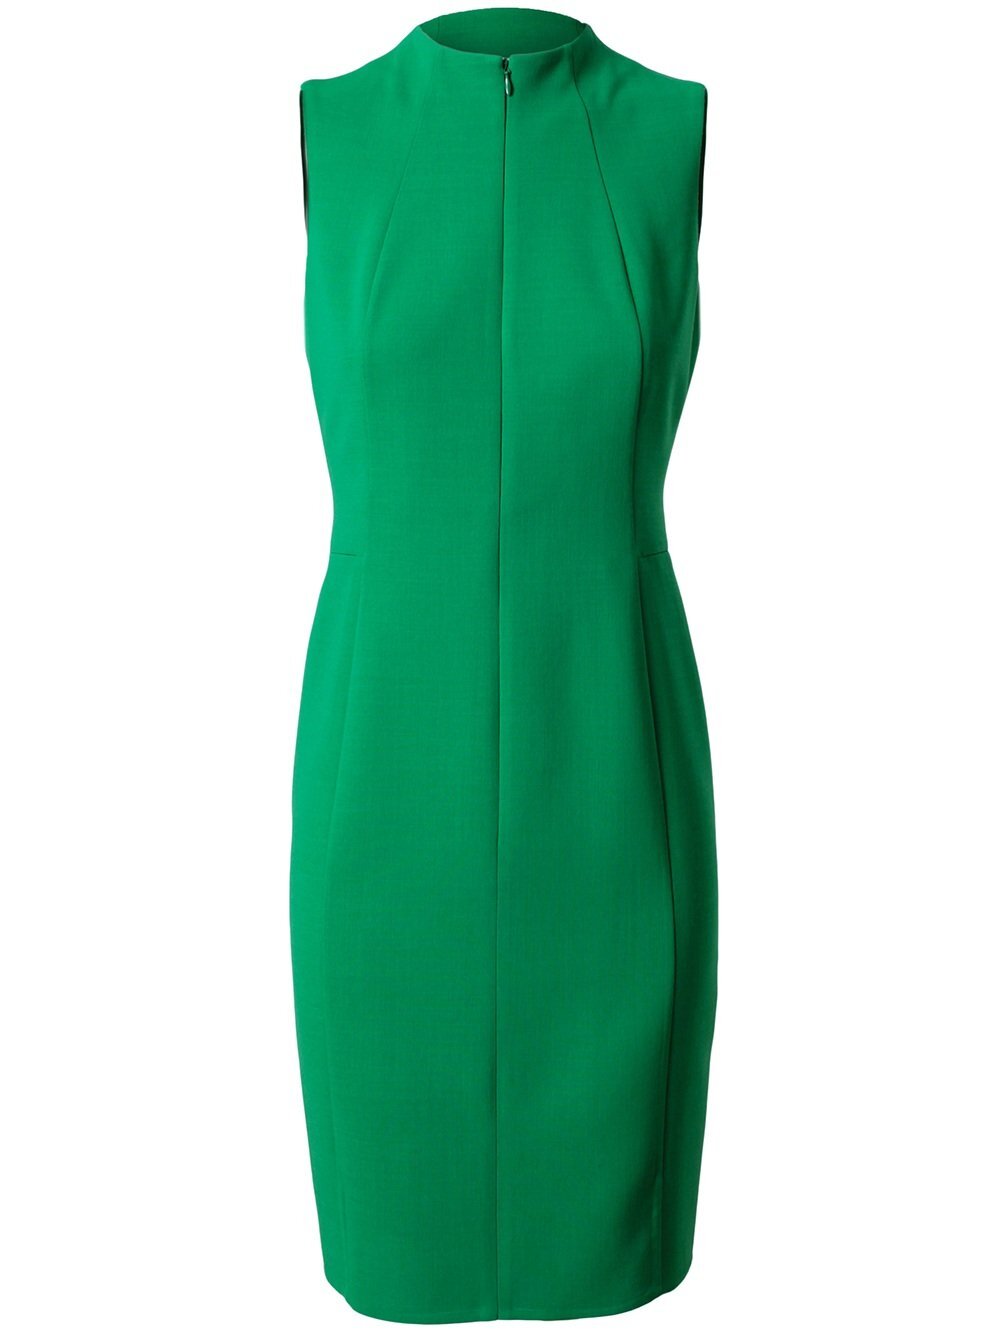 akris-green-tailored-crepe-wool-pencil-dress-product-1-6909881-594477020.jpeg